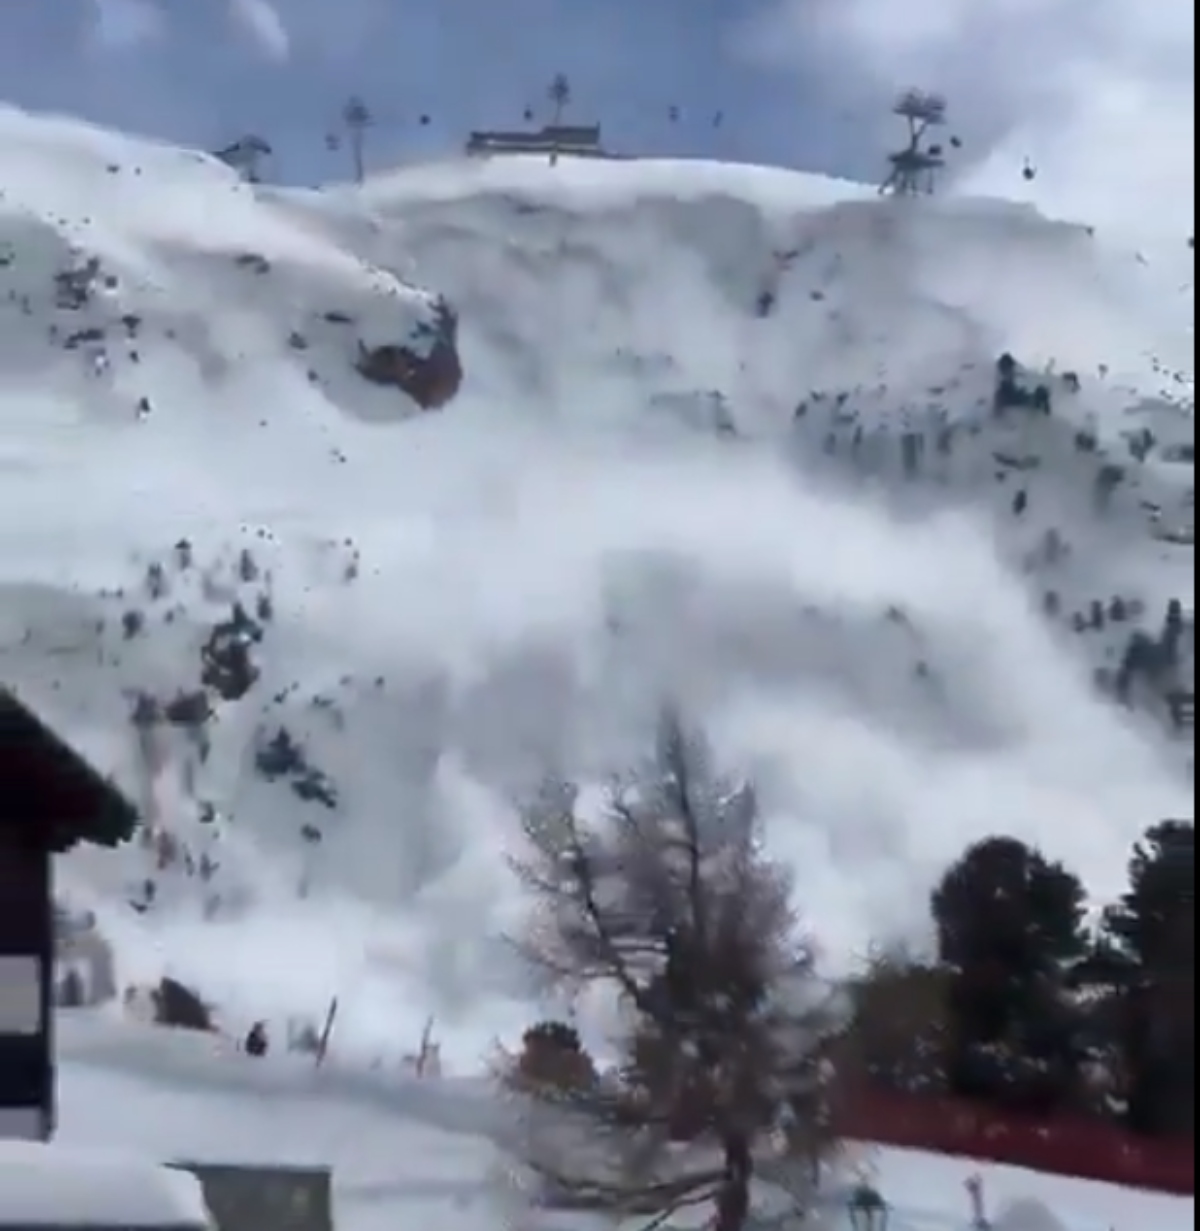  VÍDEO: avalanche em resort deixa 3 mortos; adolescente está entre as vítimas 